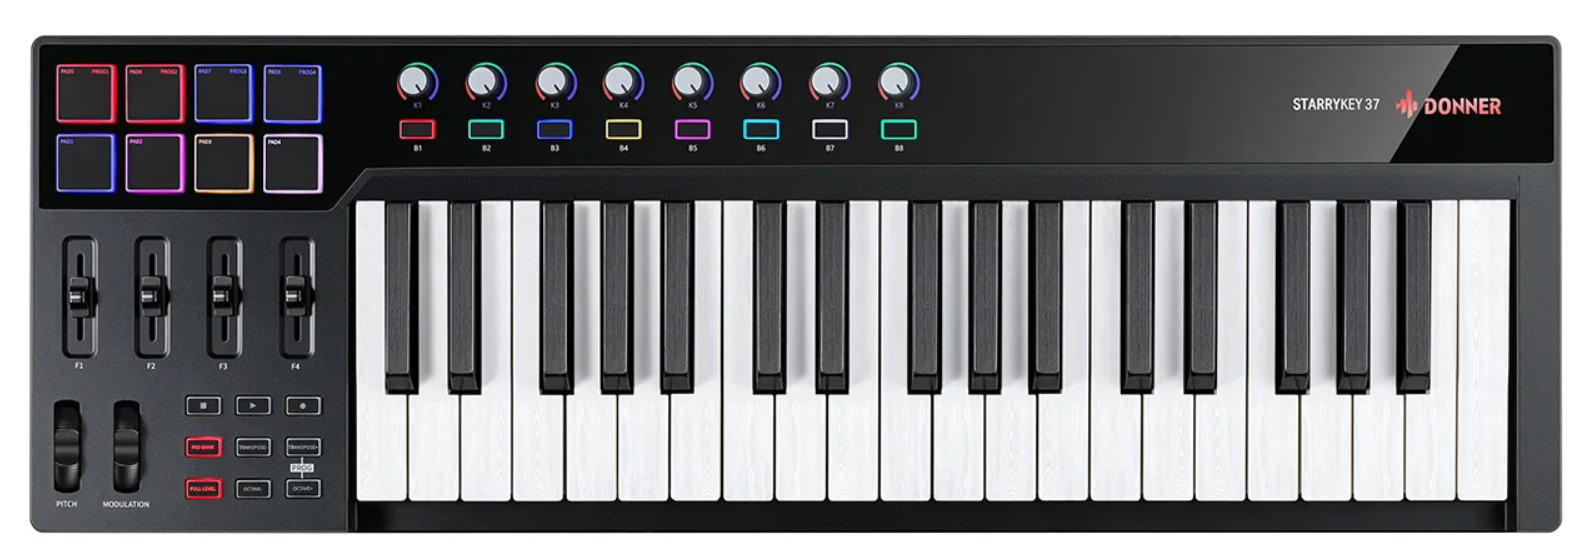 MIDI клавиатуры Donner D-37 контроллер midi клавиатуры worlde panda с 25 клавишами и midi контроллер drum pad